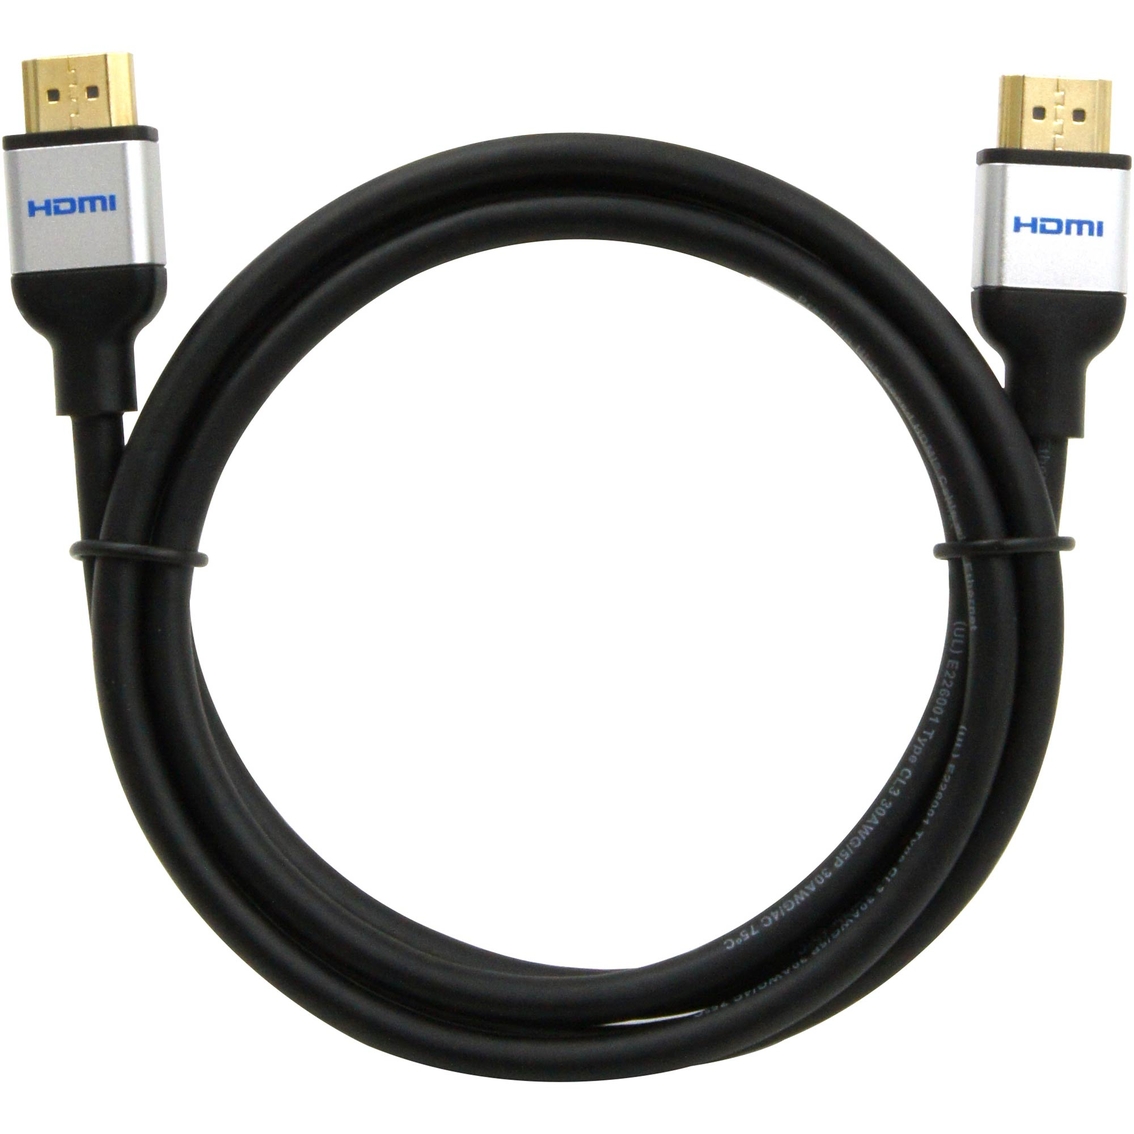 Powerzone Premium HDMI Cable - Image 4 of 4